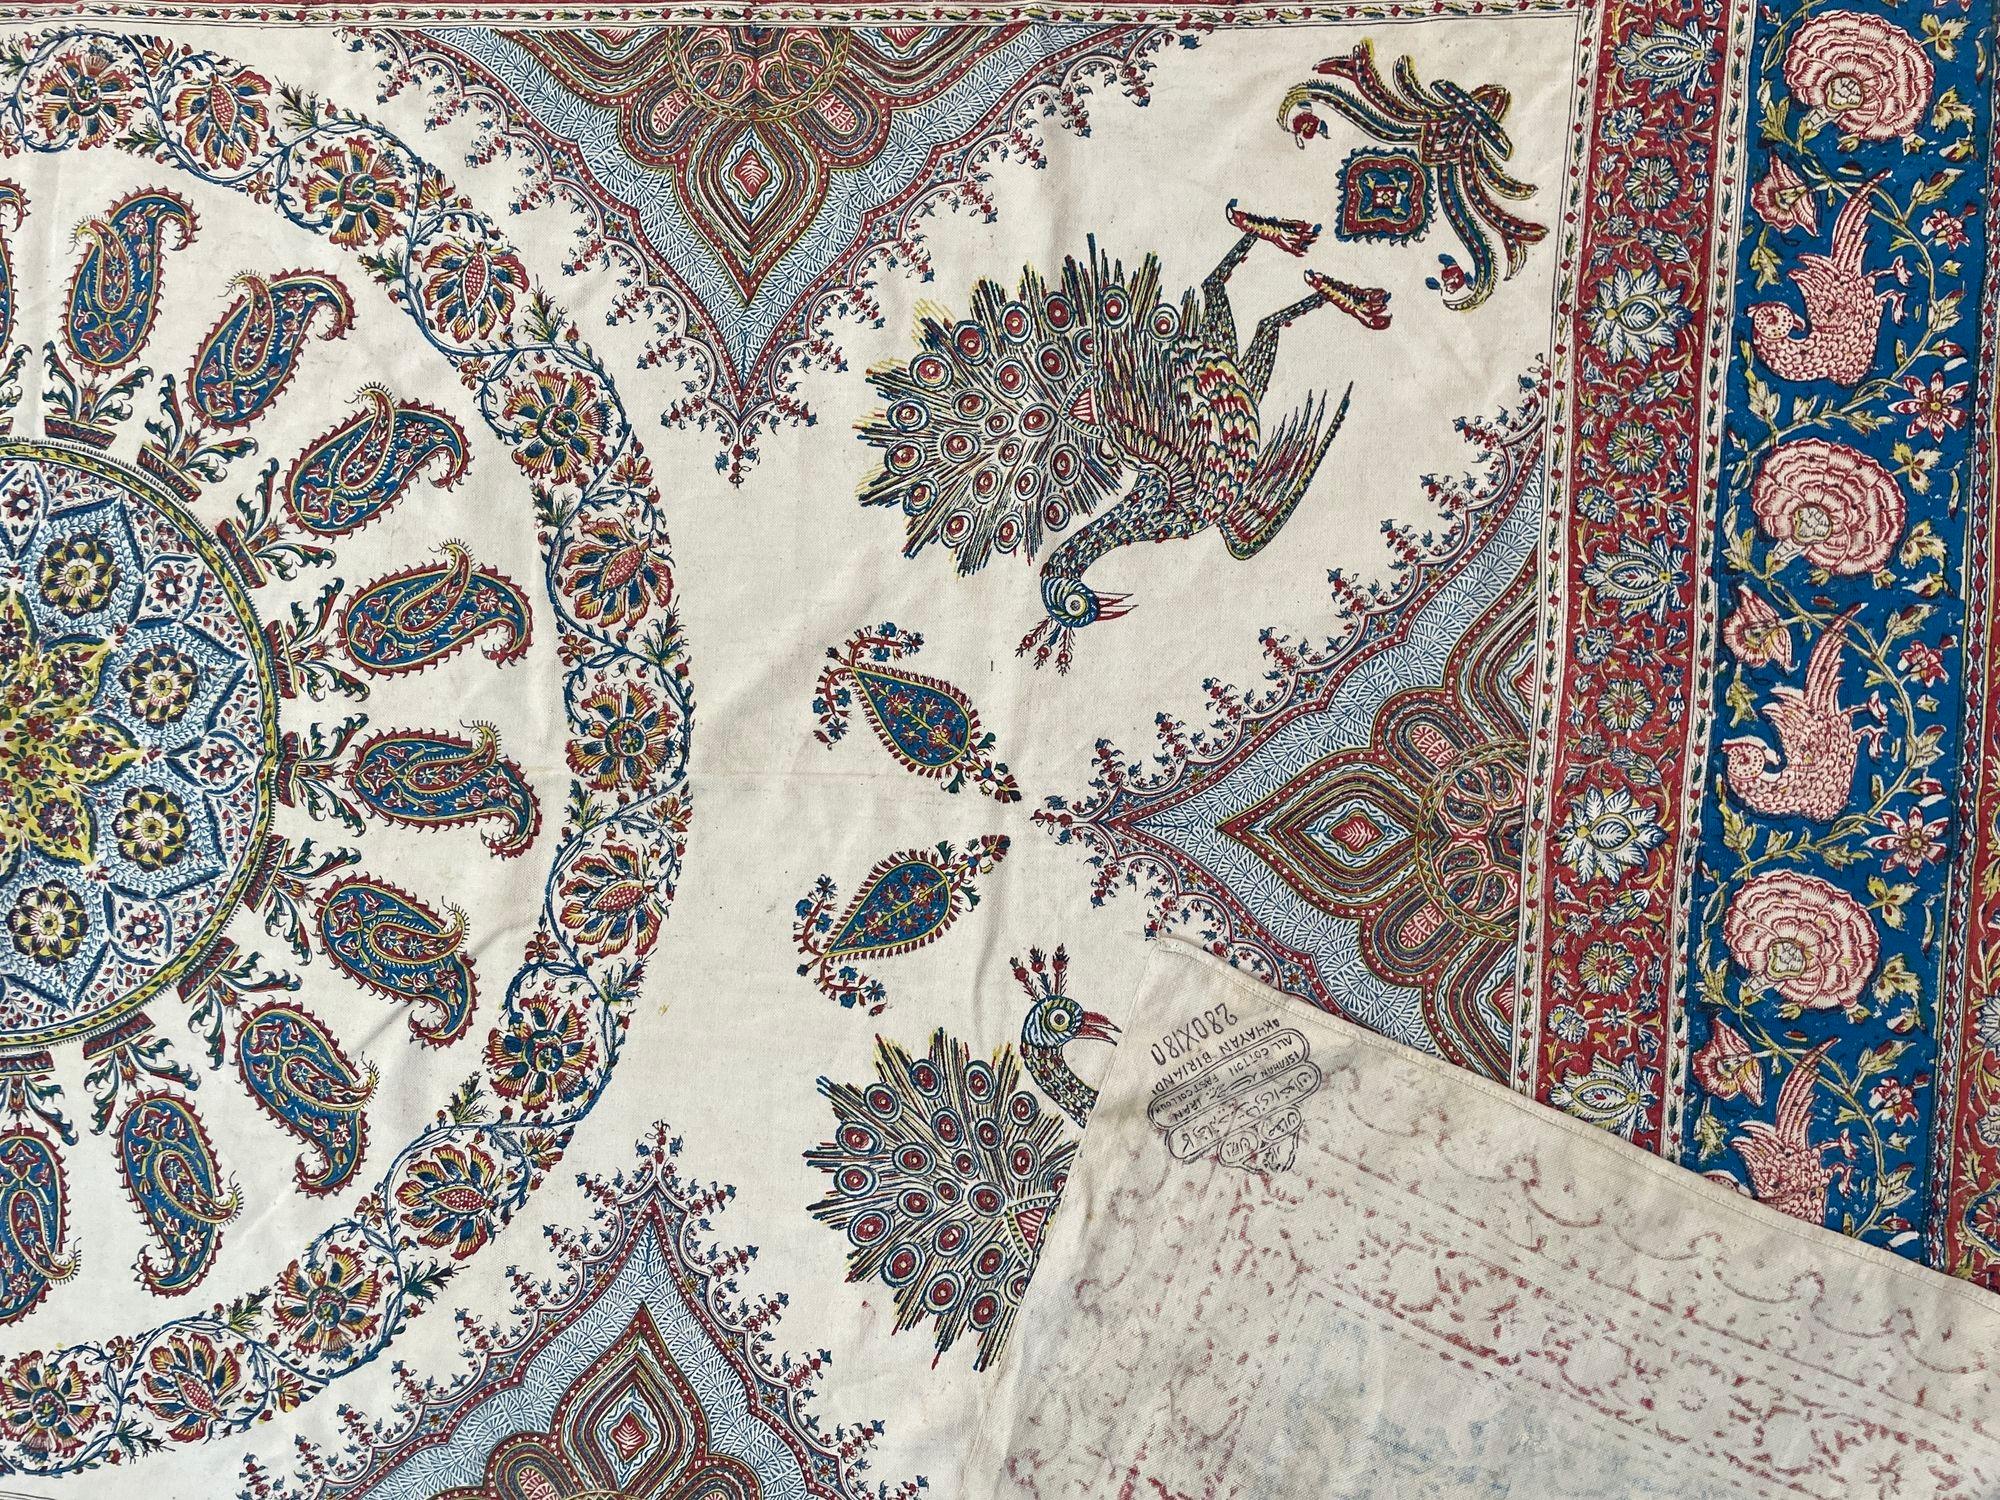 Large Isfahan Ghalamkar Persian Paisley Textile Block Printed 1950s For Sale 9